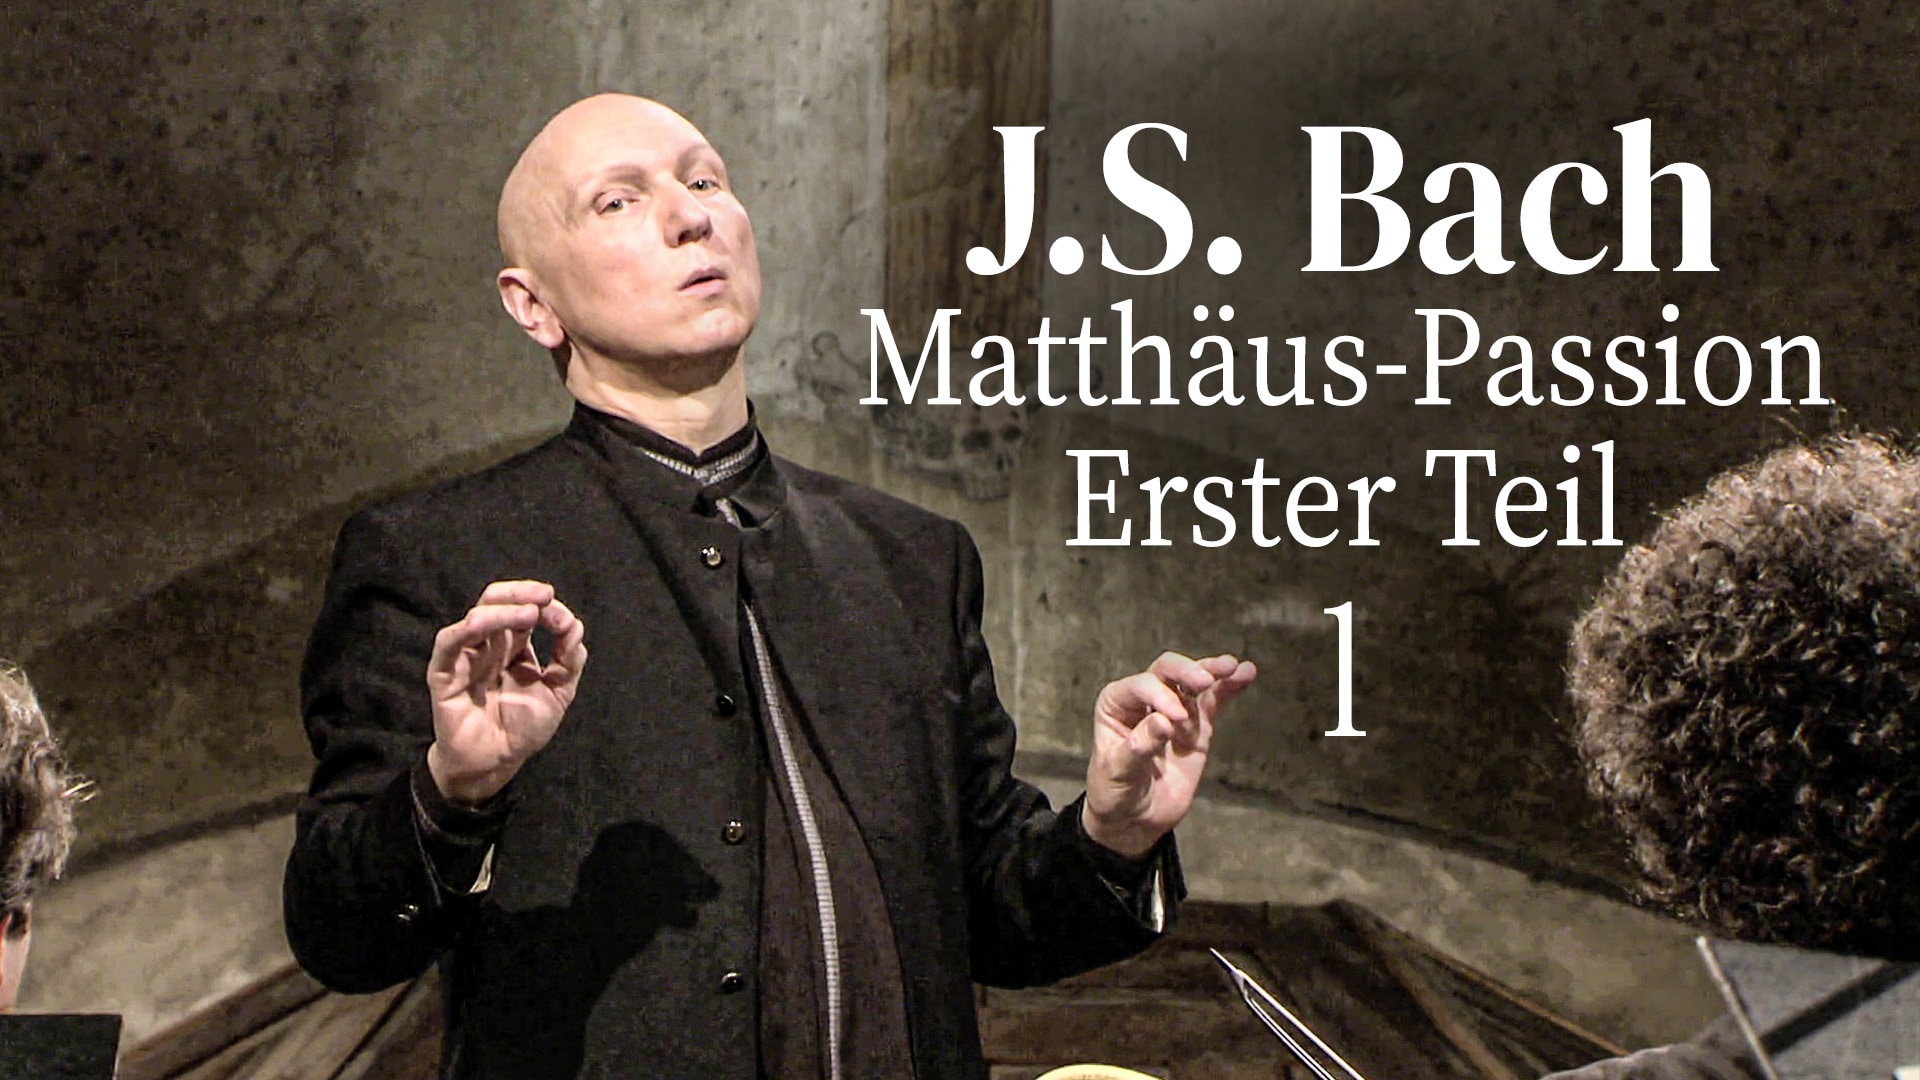 J.S. Bach: Matthäus-Passion Erster Teil